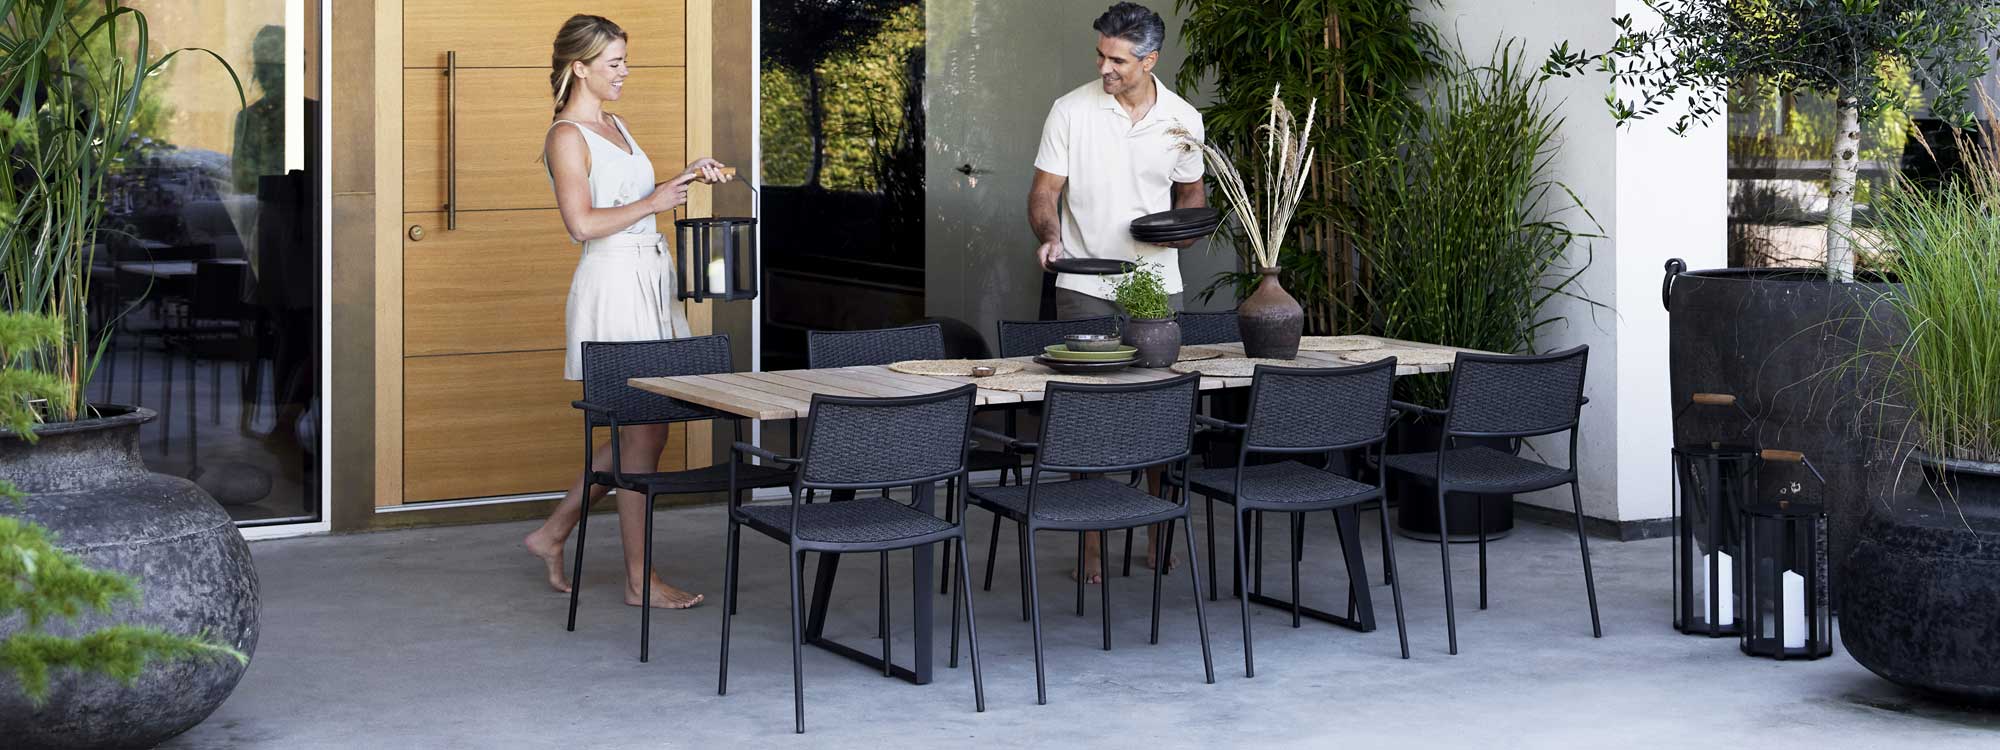 Image of Cane-line Less garden chairs and Copenhagen extending teak table